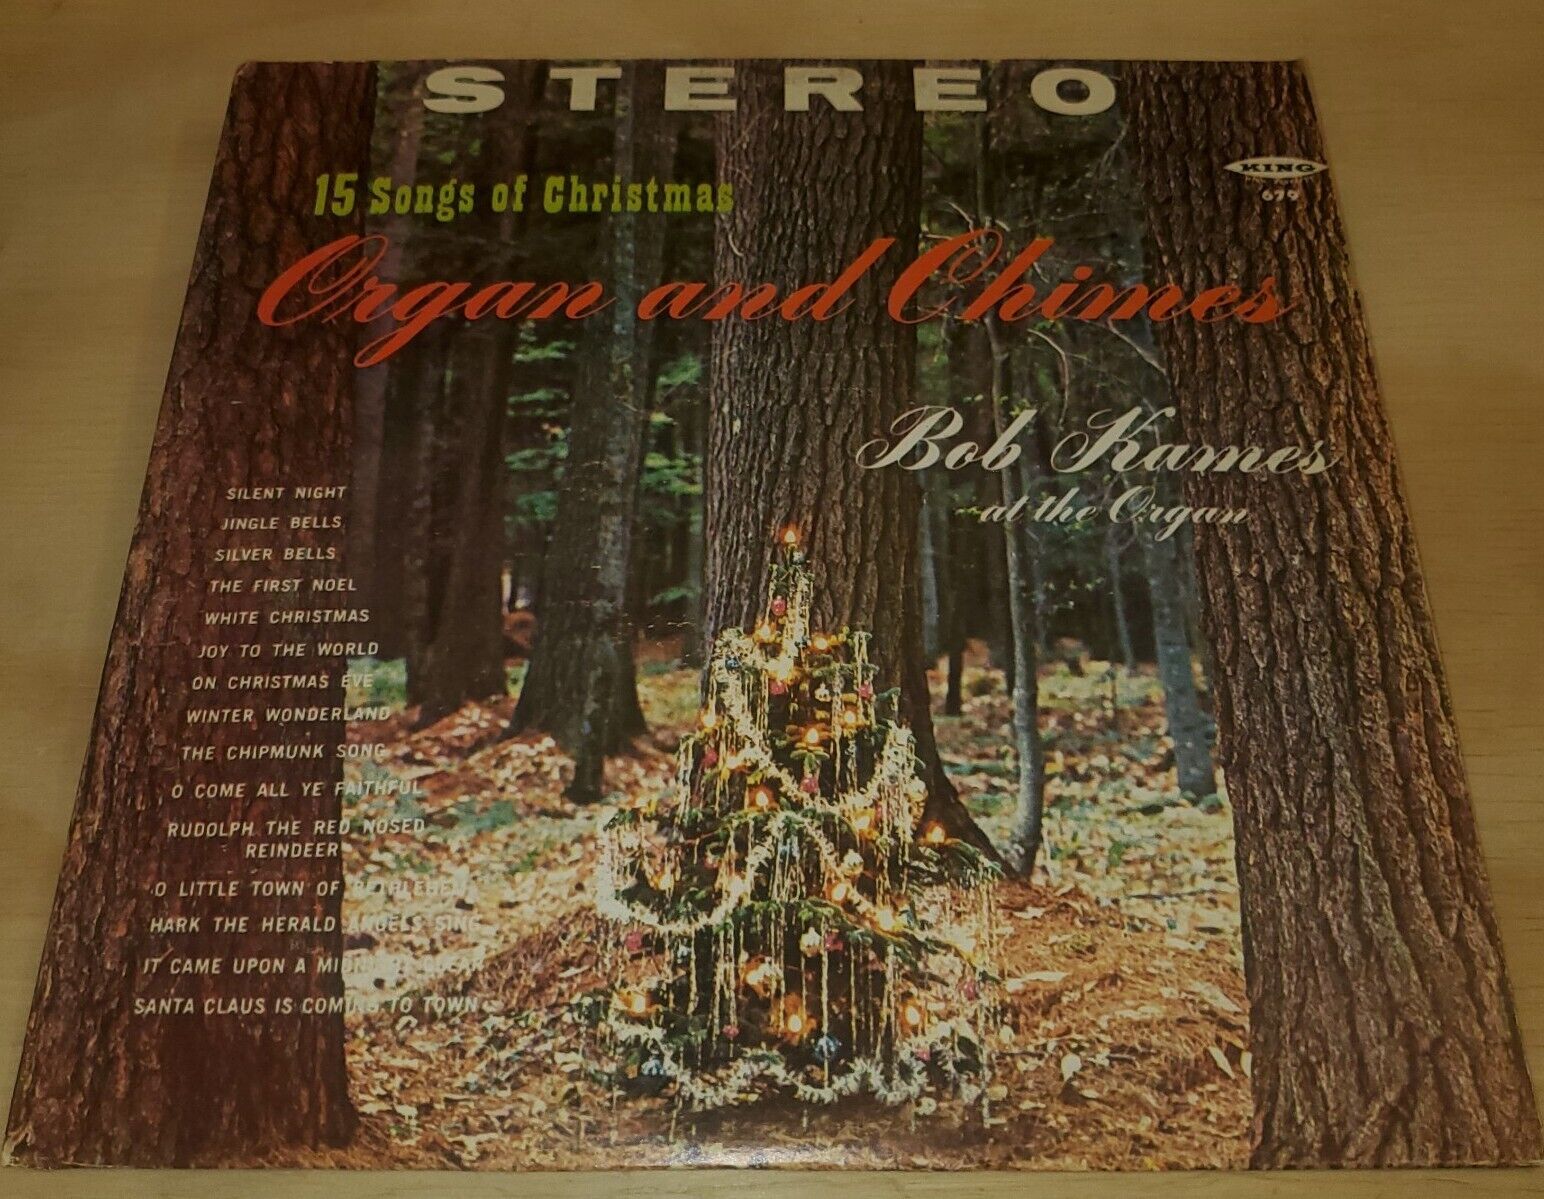  15 Songs Of Christmas Organ and Chimes - Bob Kames 12